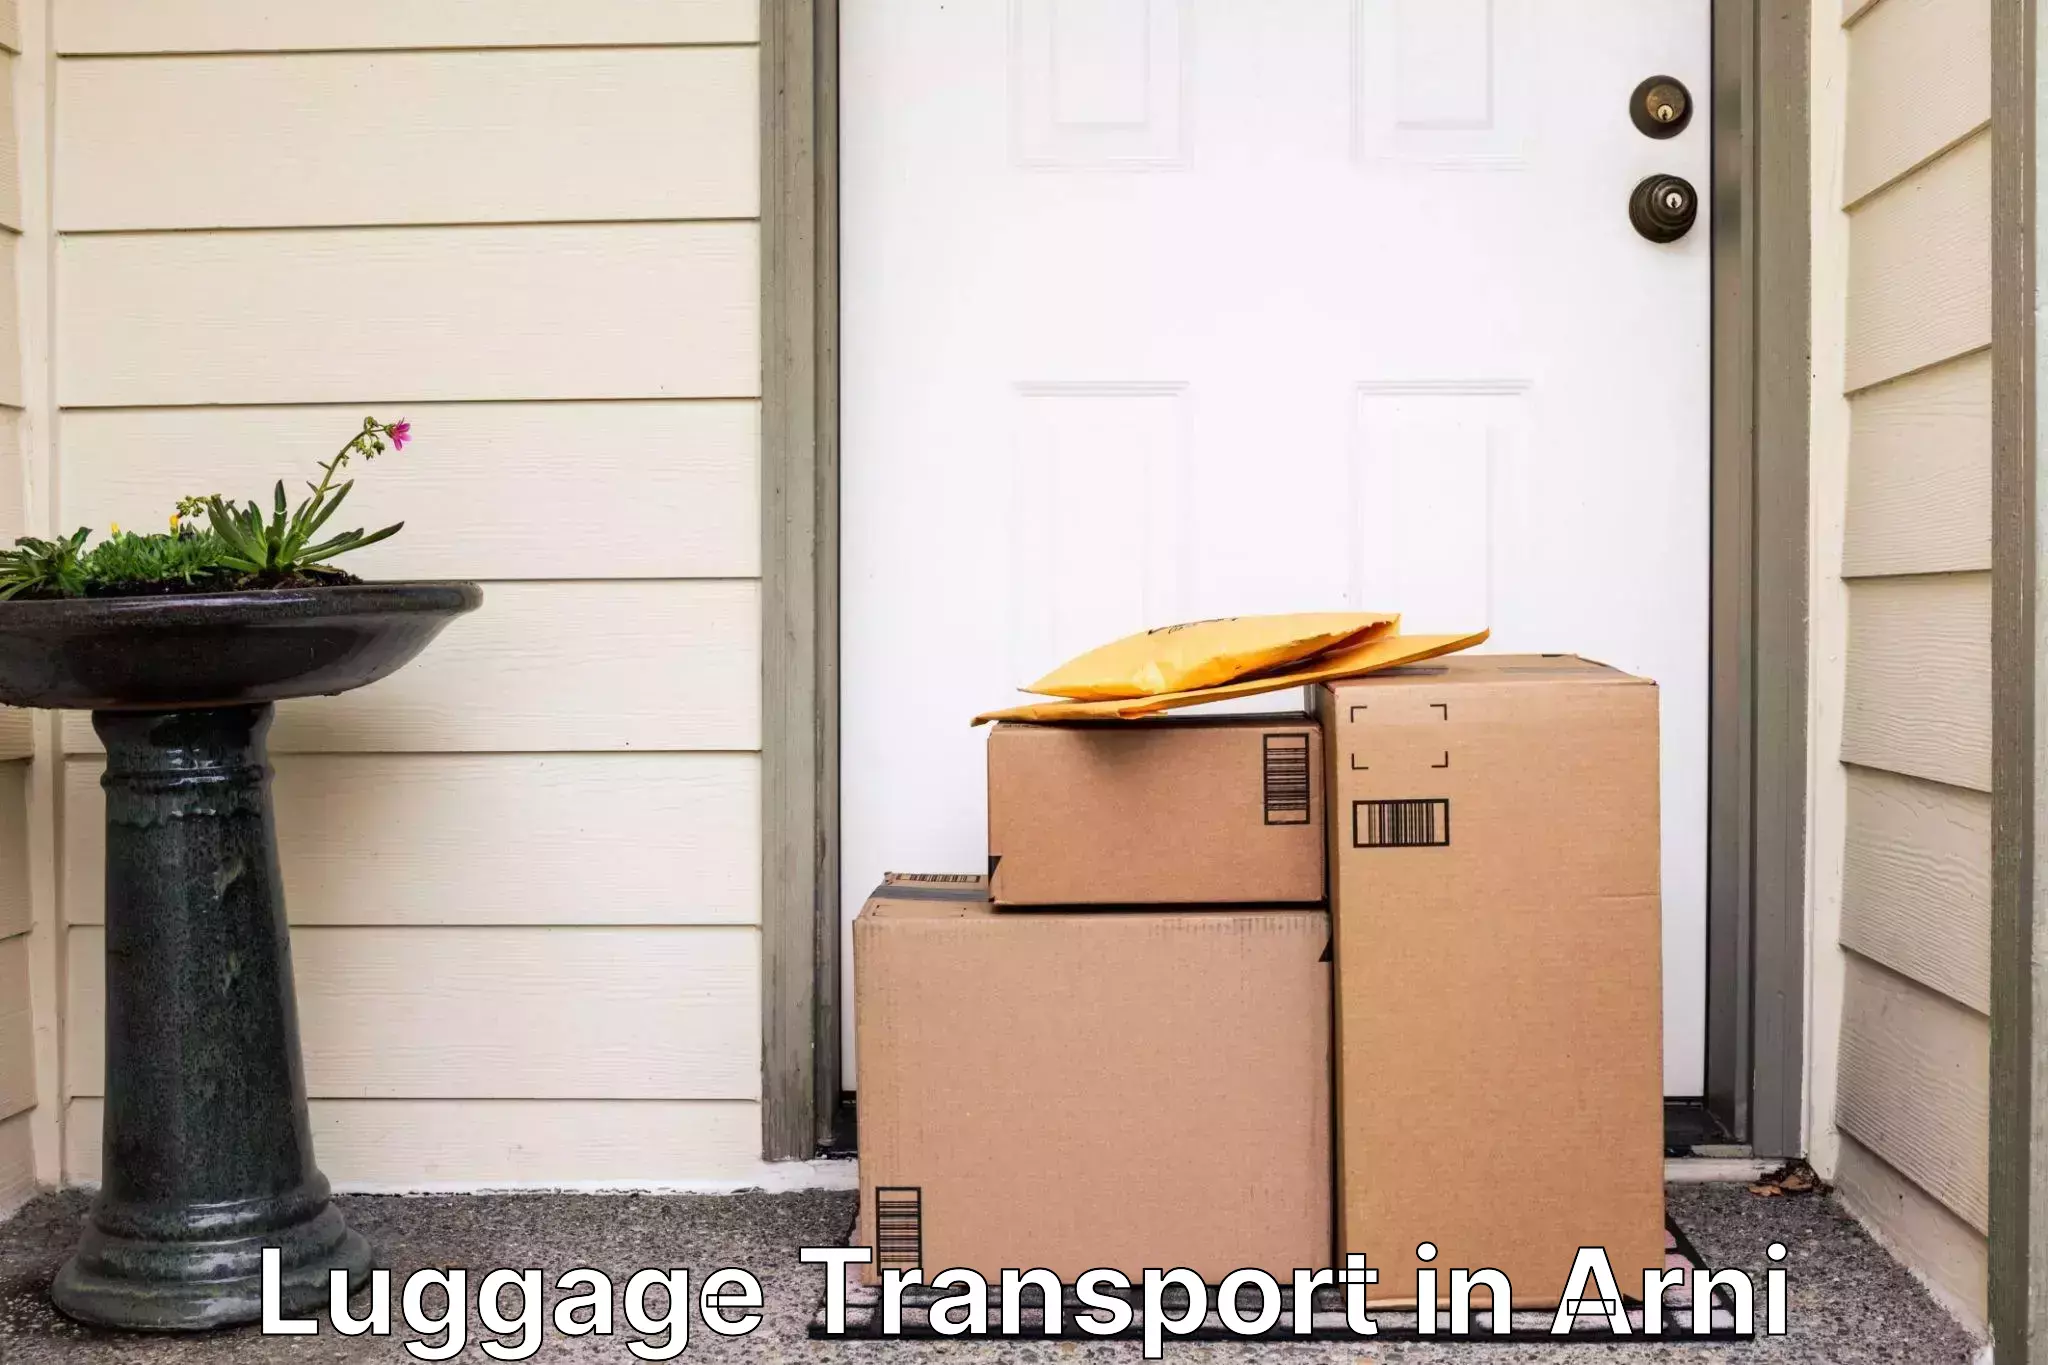 Luggage transport consultancy in Arni